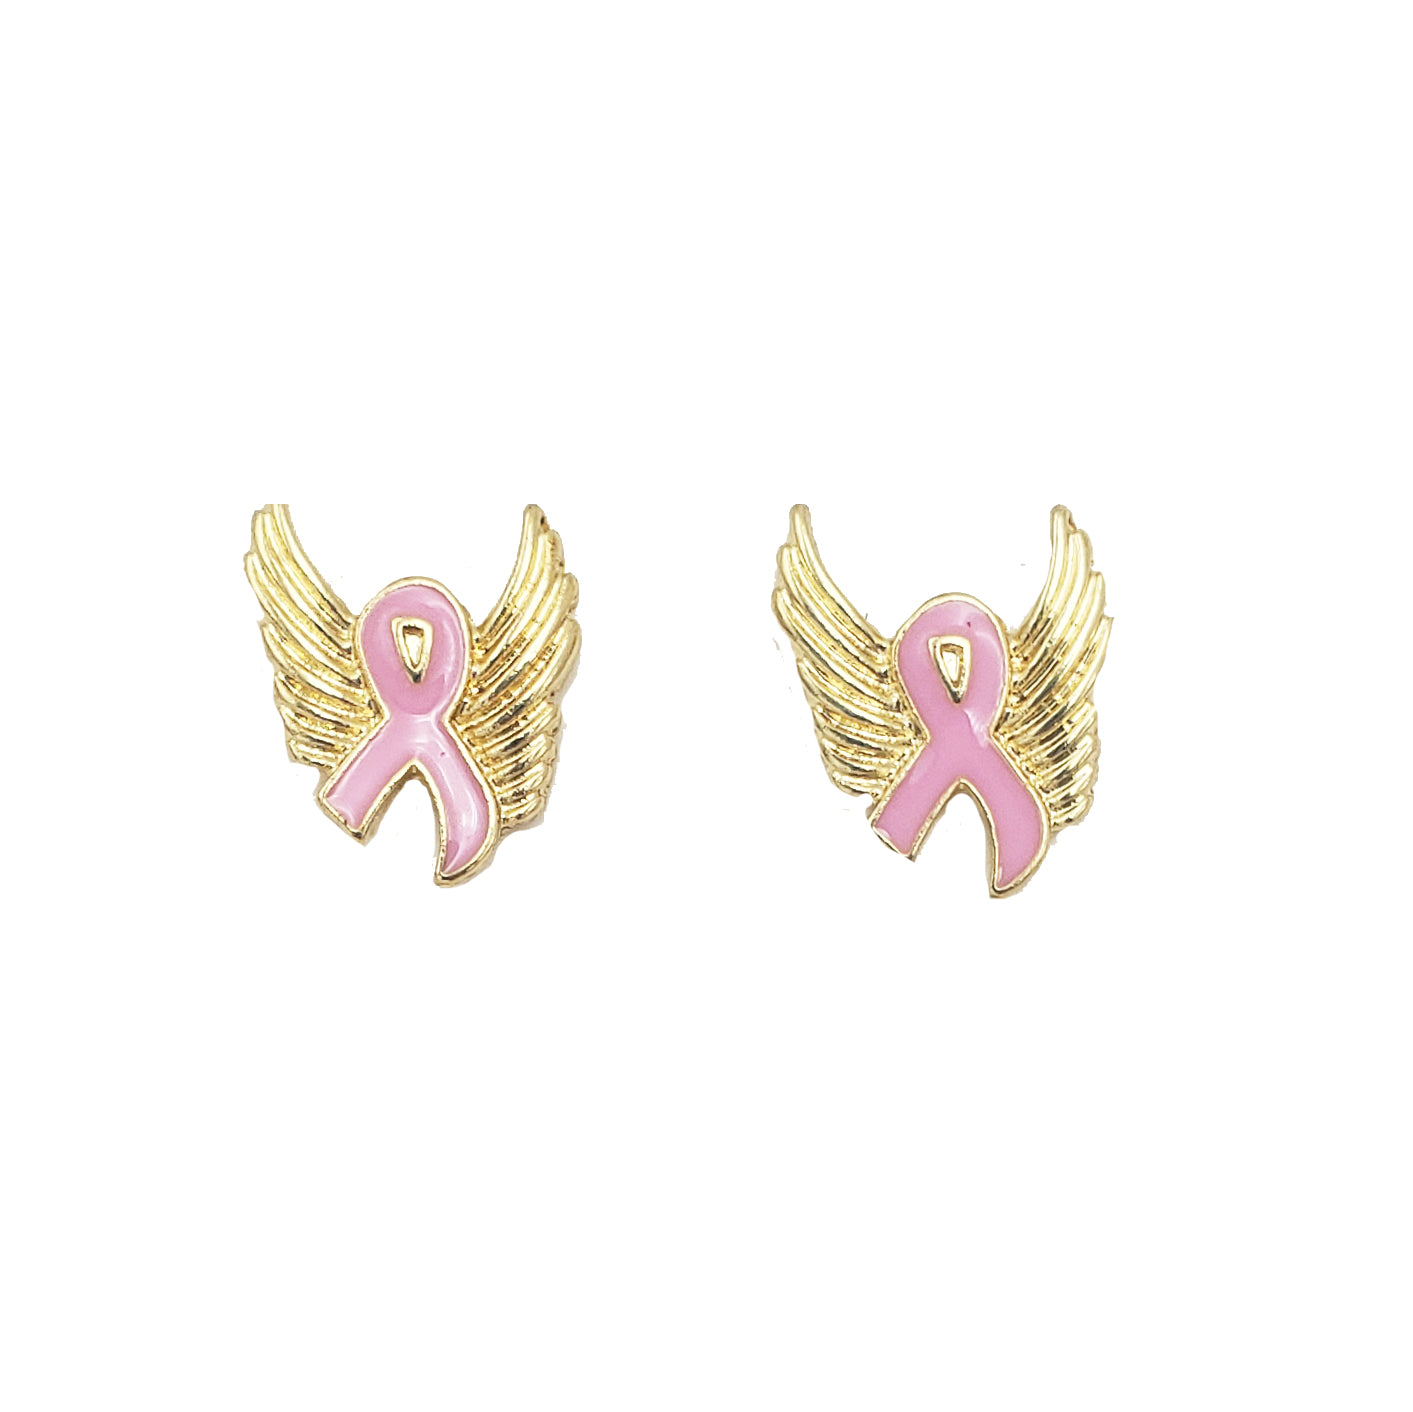 Fun Enamel Coated Pink Ribbon Breast Cancer Awareness Stud Earrings Gift Set Of 3 (Angle Wings Bra Rainbow Gold Tone)